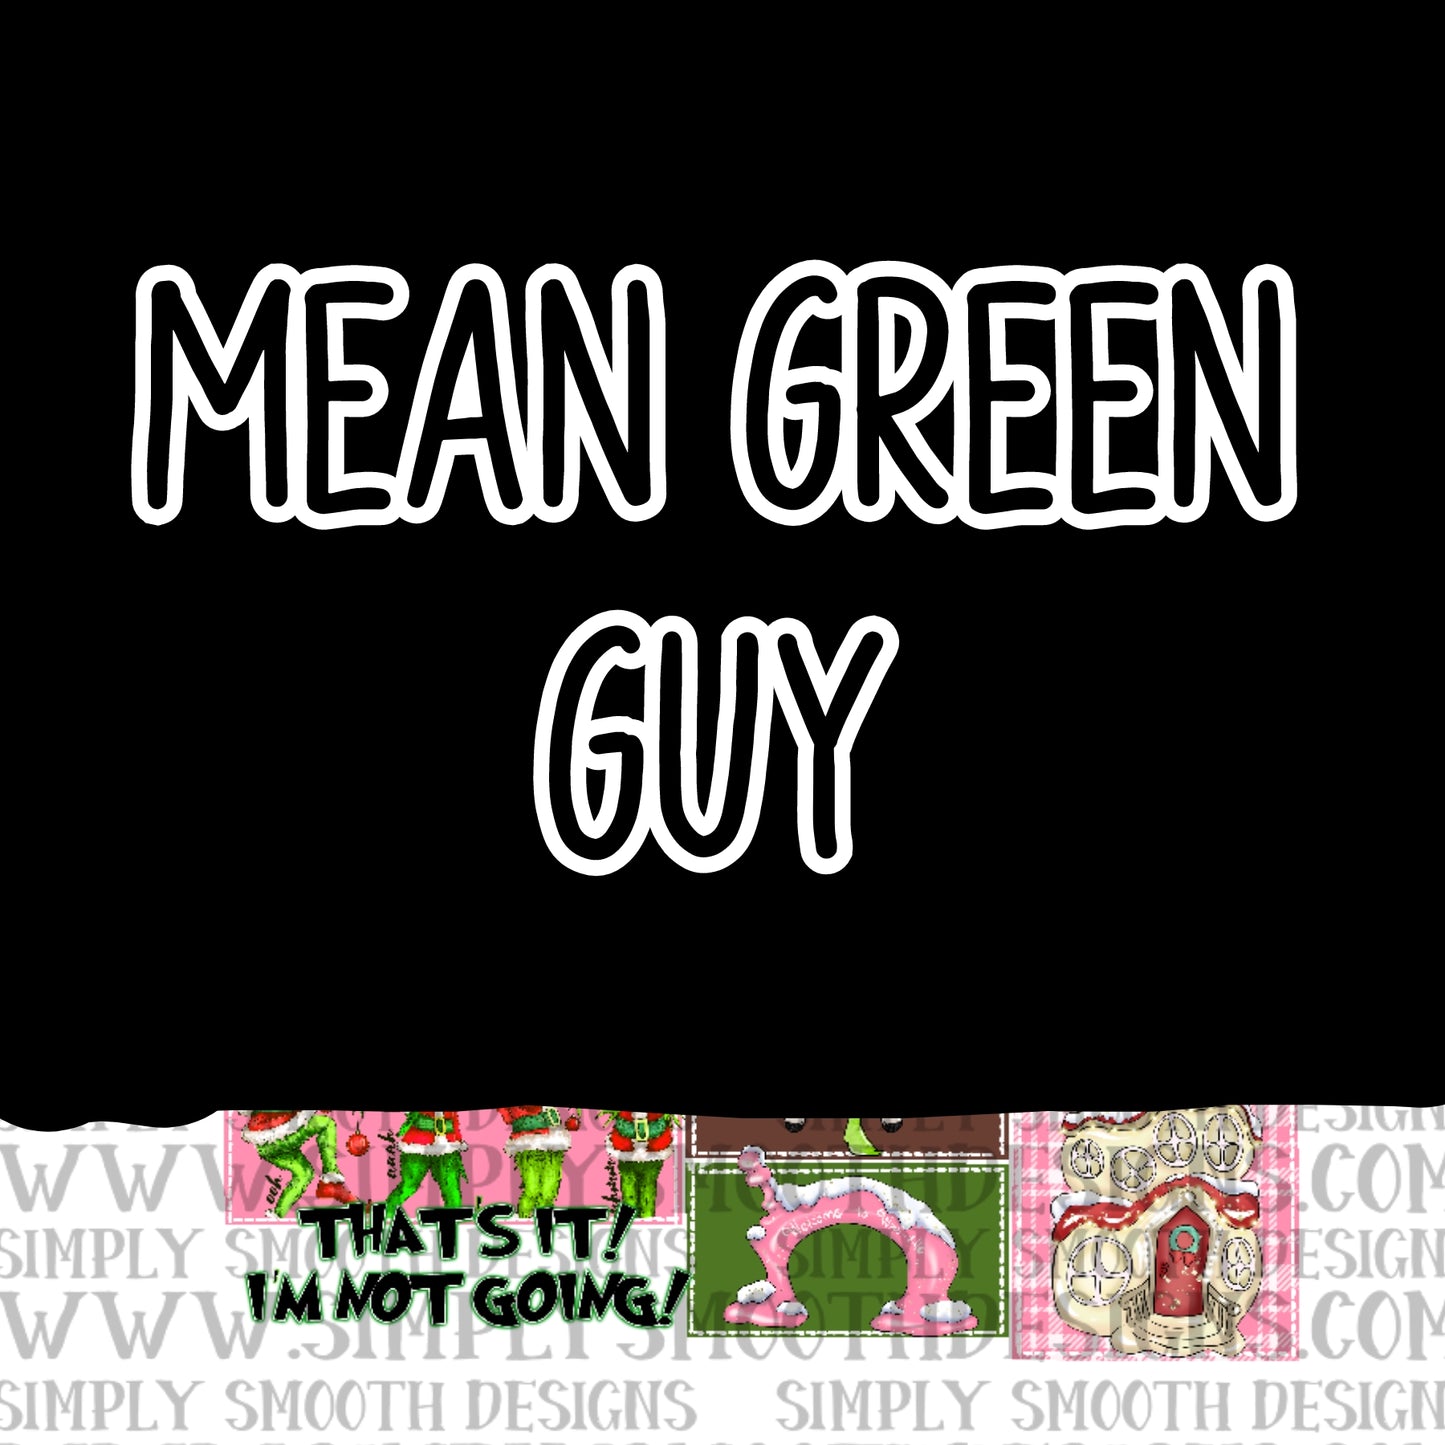 Mean Green Guy